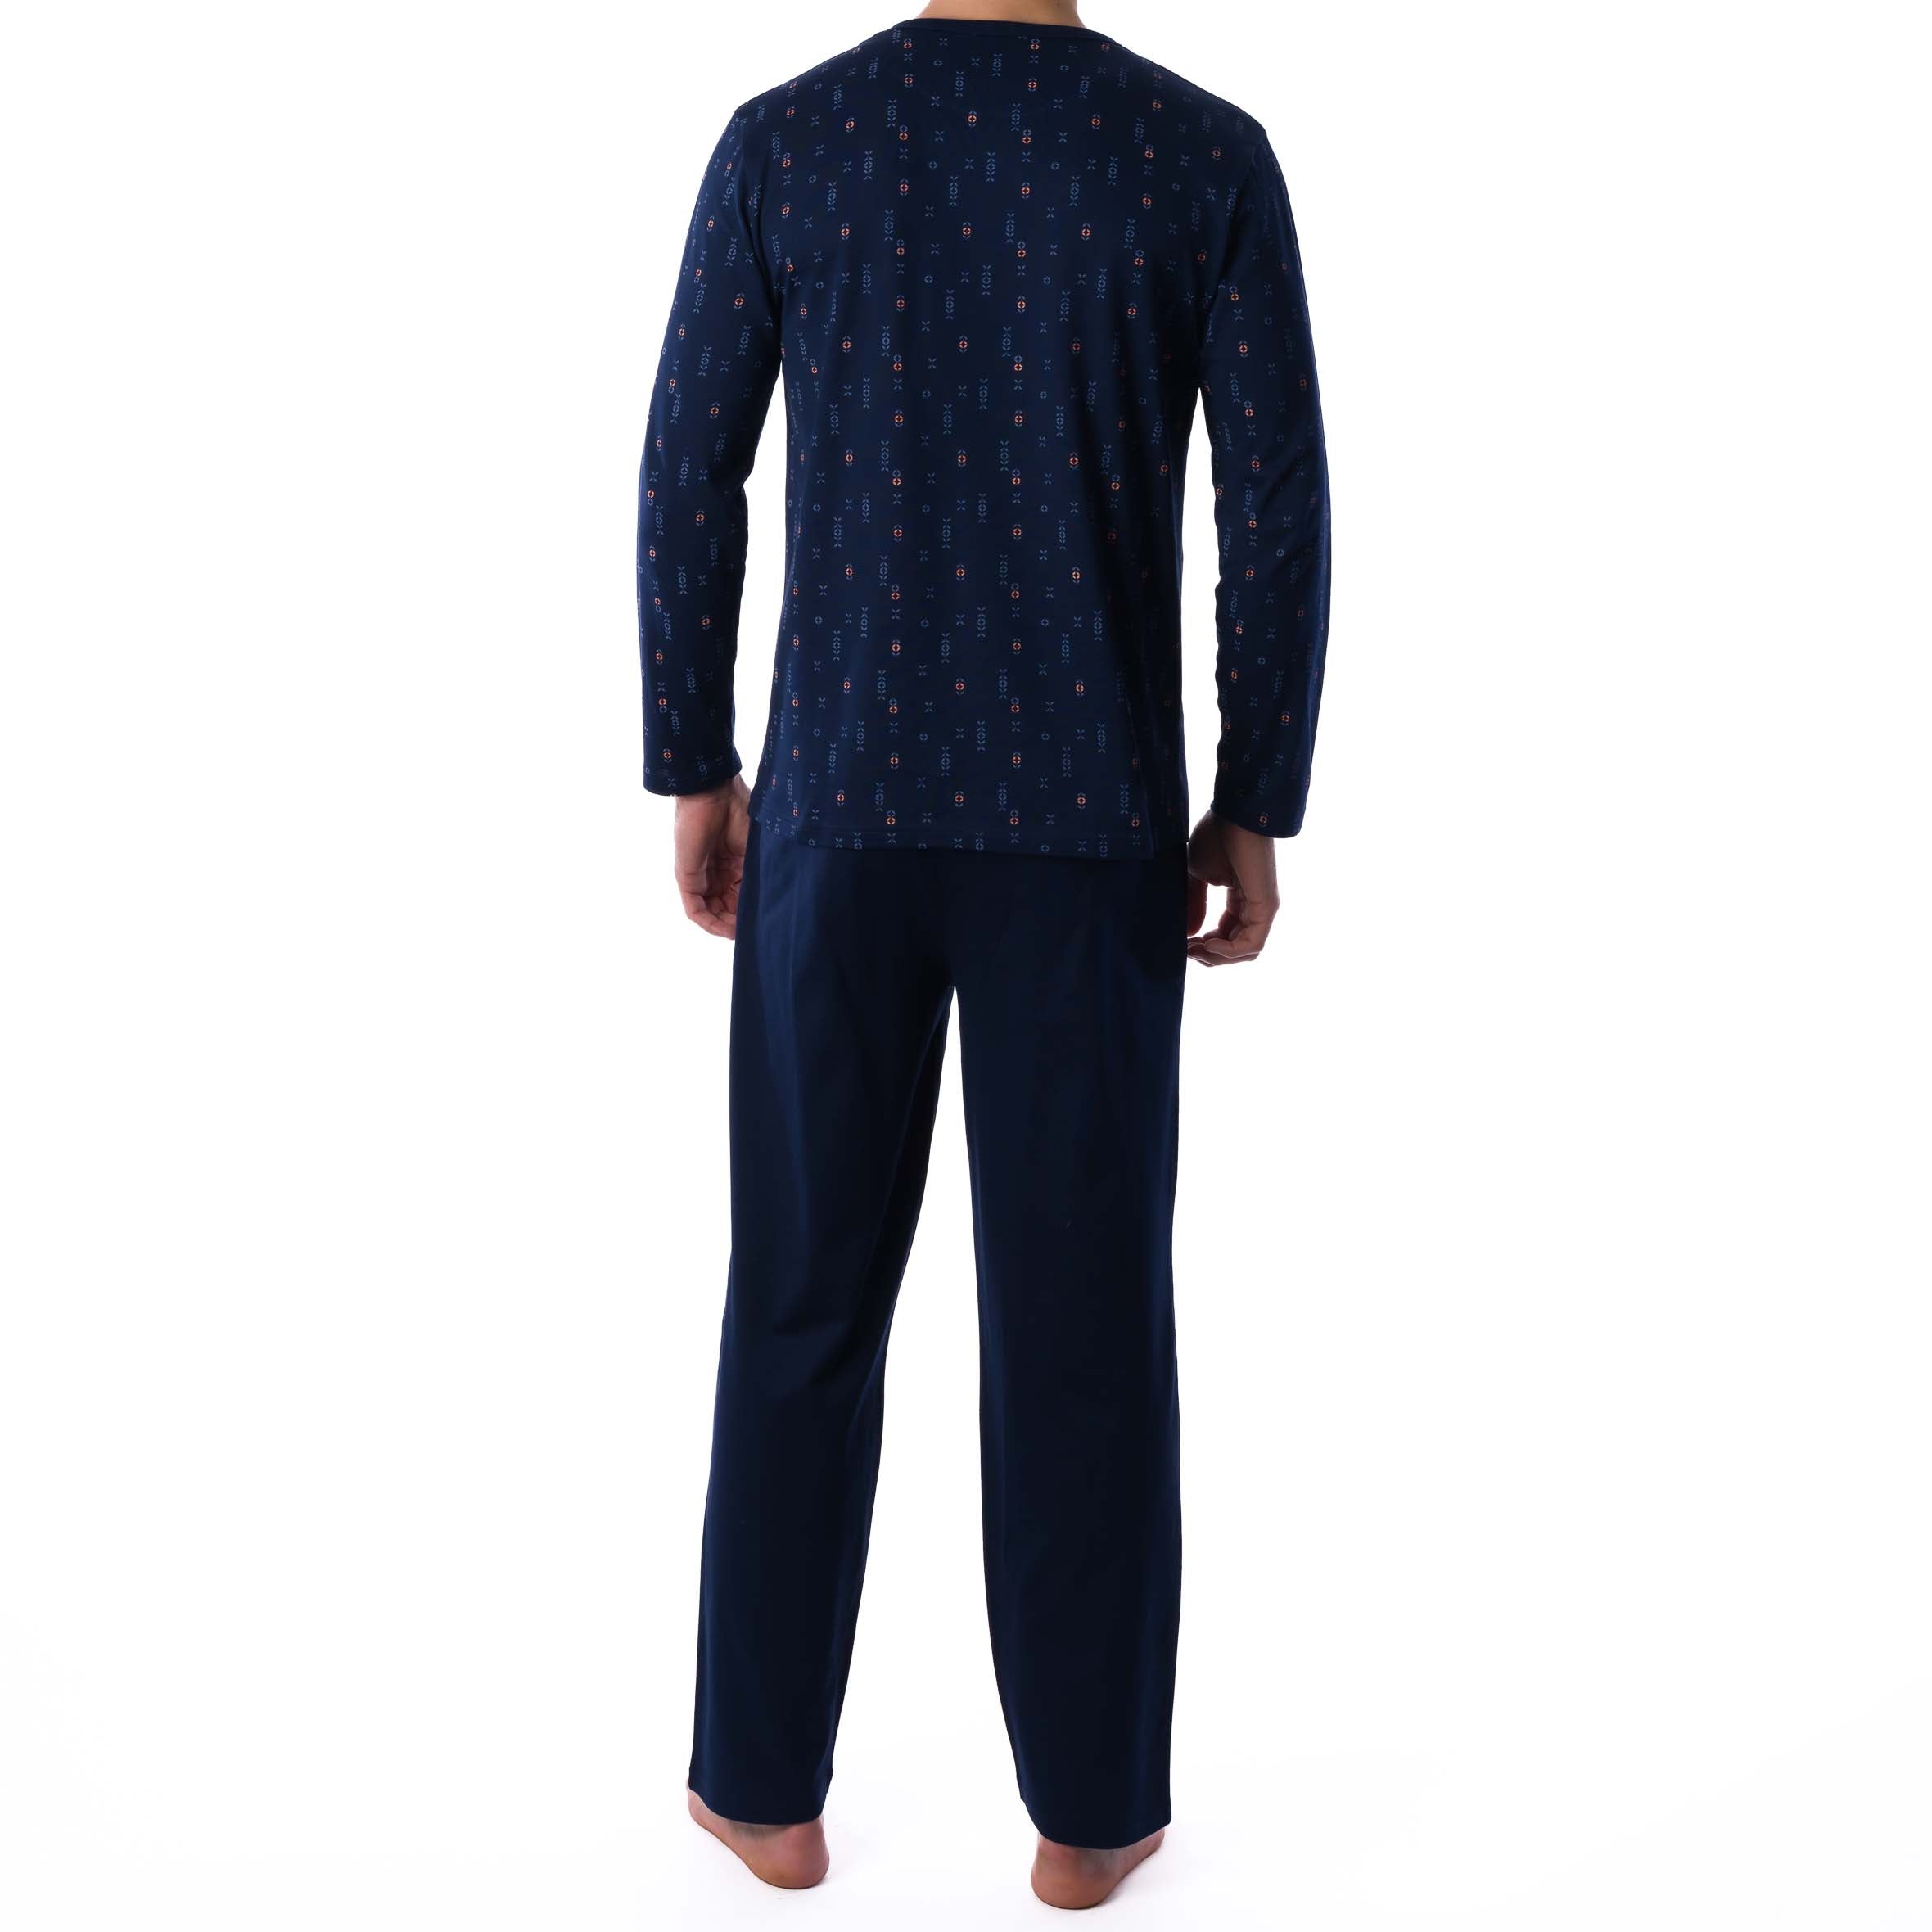 Pyjama Col Boutonné en Jersey de Coton Mercerisé Imprimé Bleu Marine